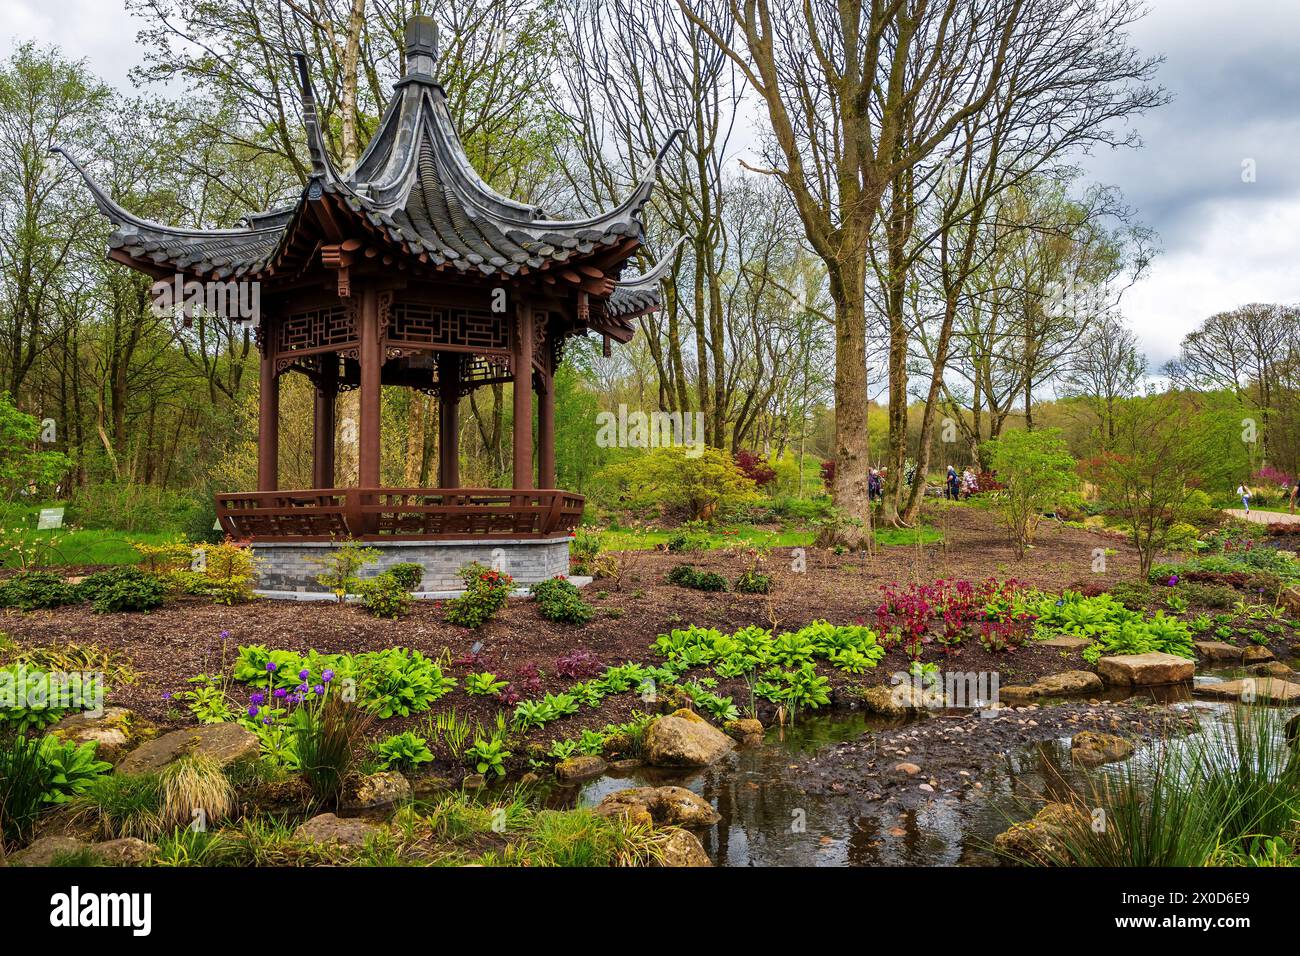 RHS garden Bridgewater at Worsly near Manchester. The Chinese music pavillion. Stock Photo